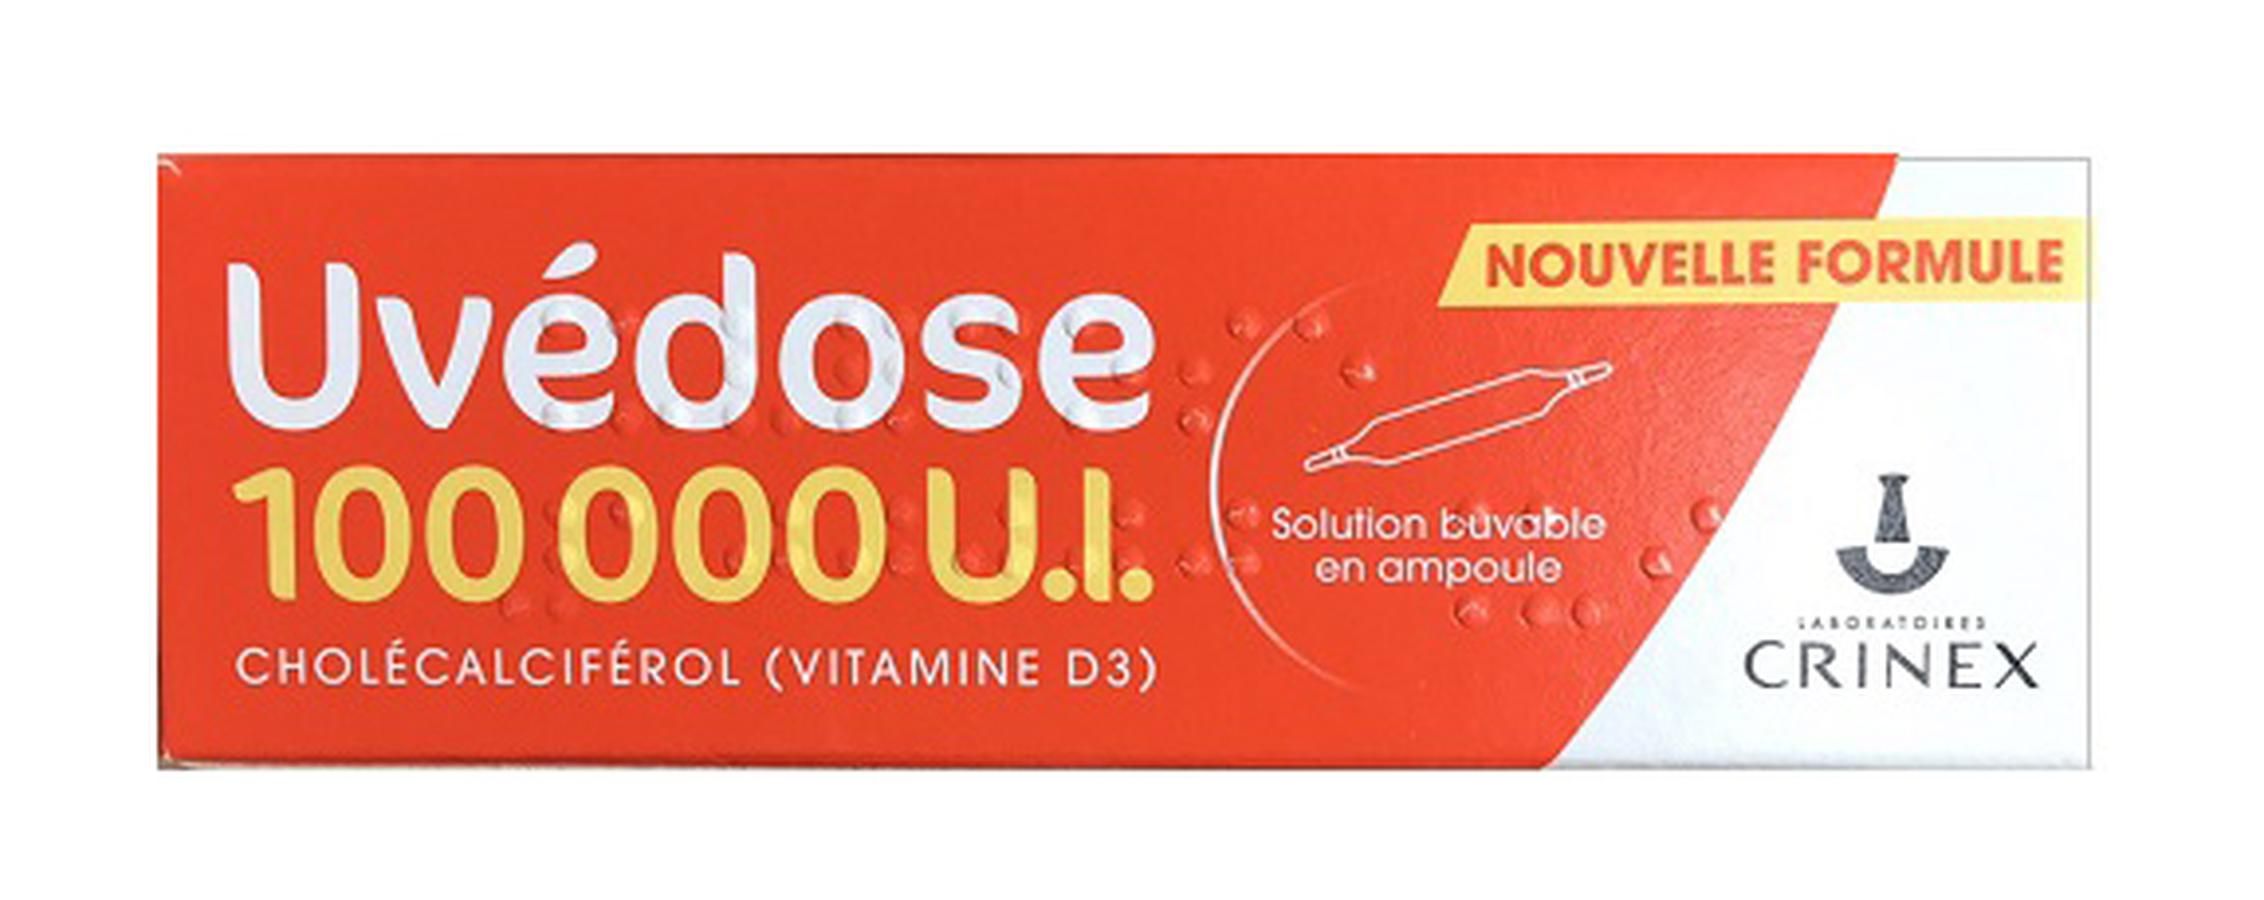 Vitamin D3 Uvedose liều cao 100000 UI-1 liều cho 3 tháng 1